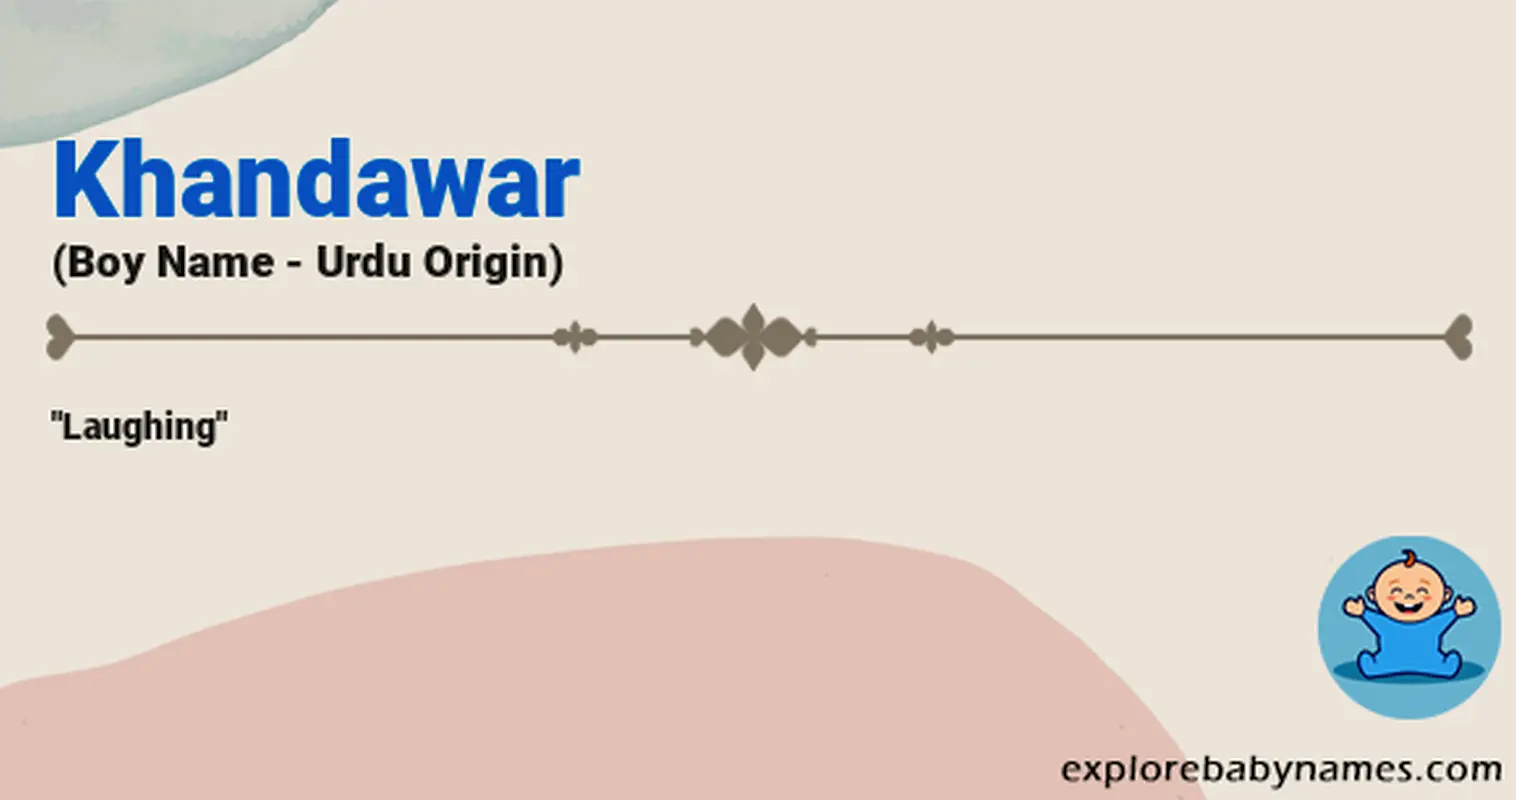 Meaning of Khandawar